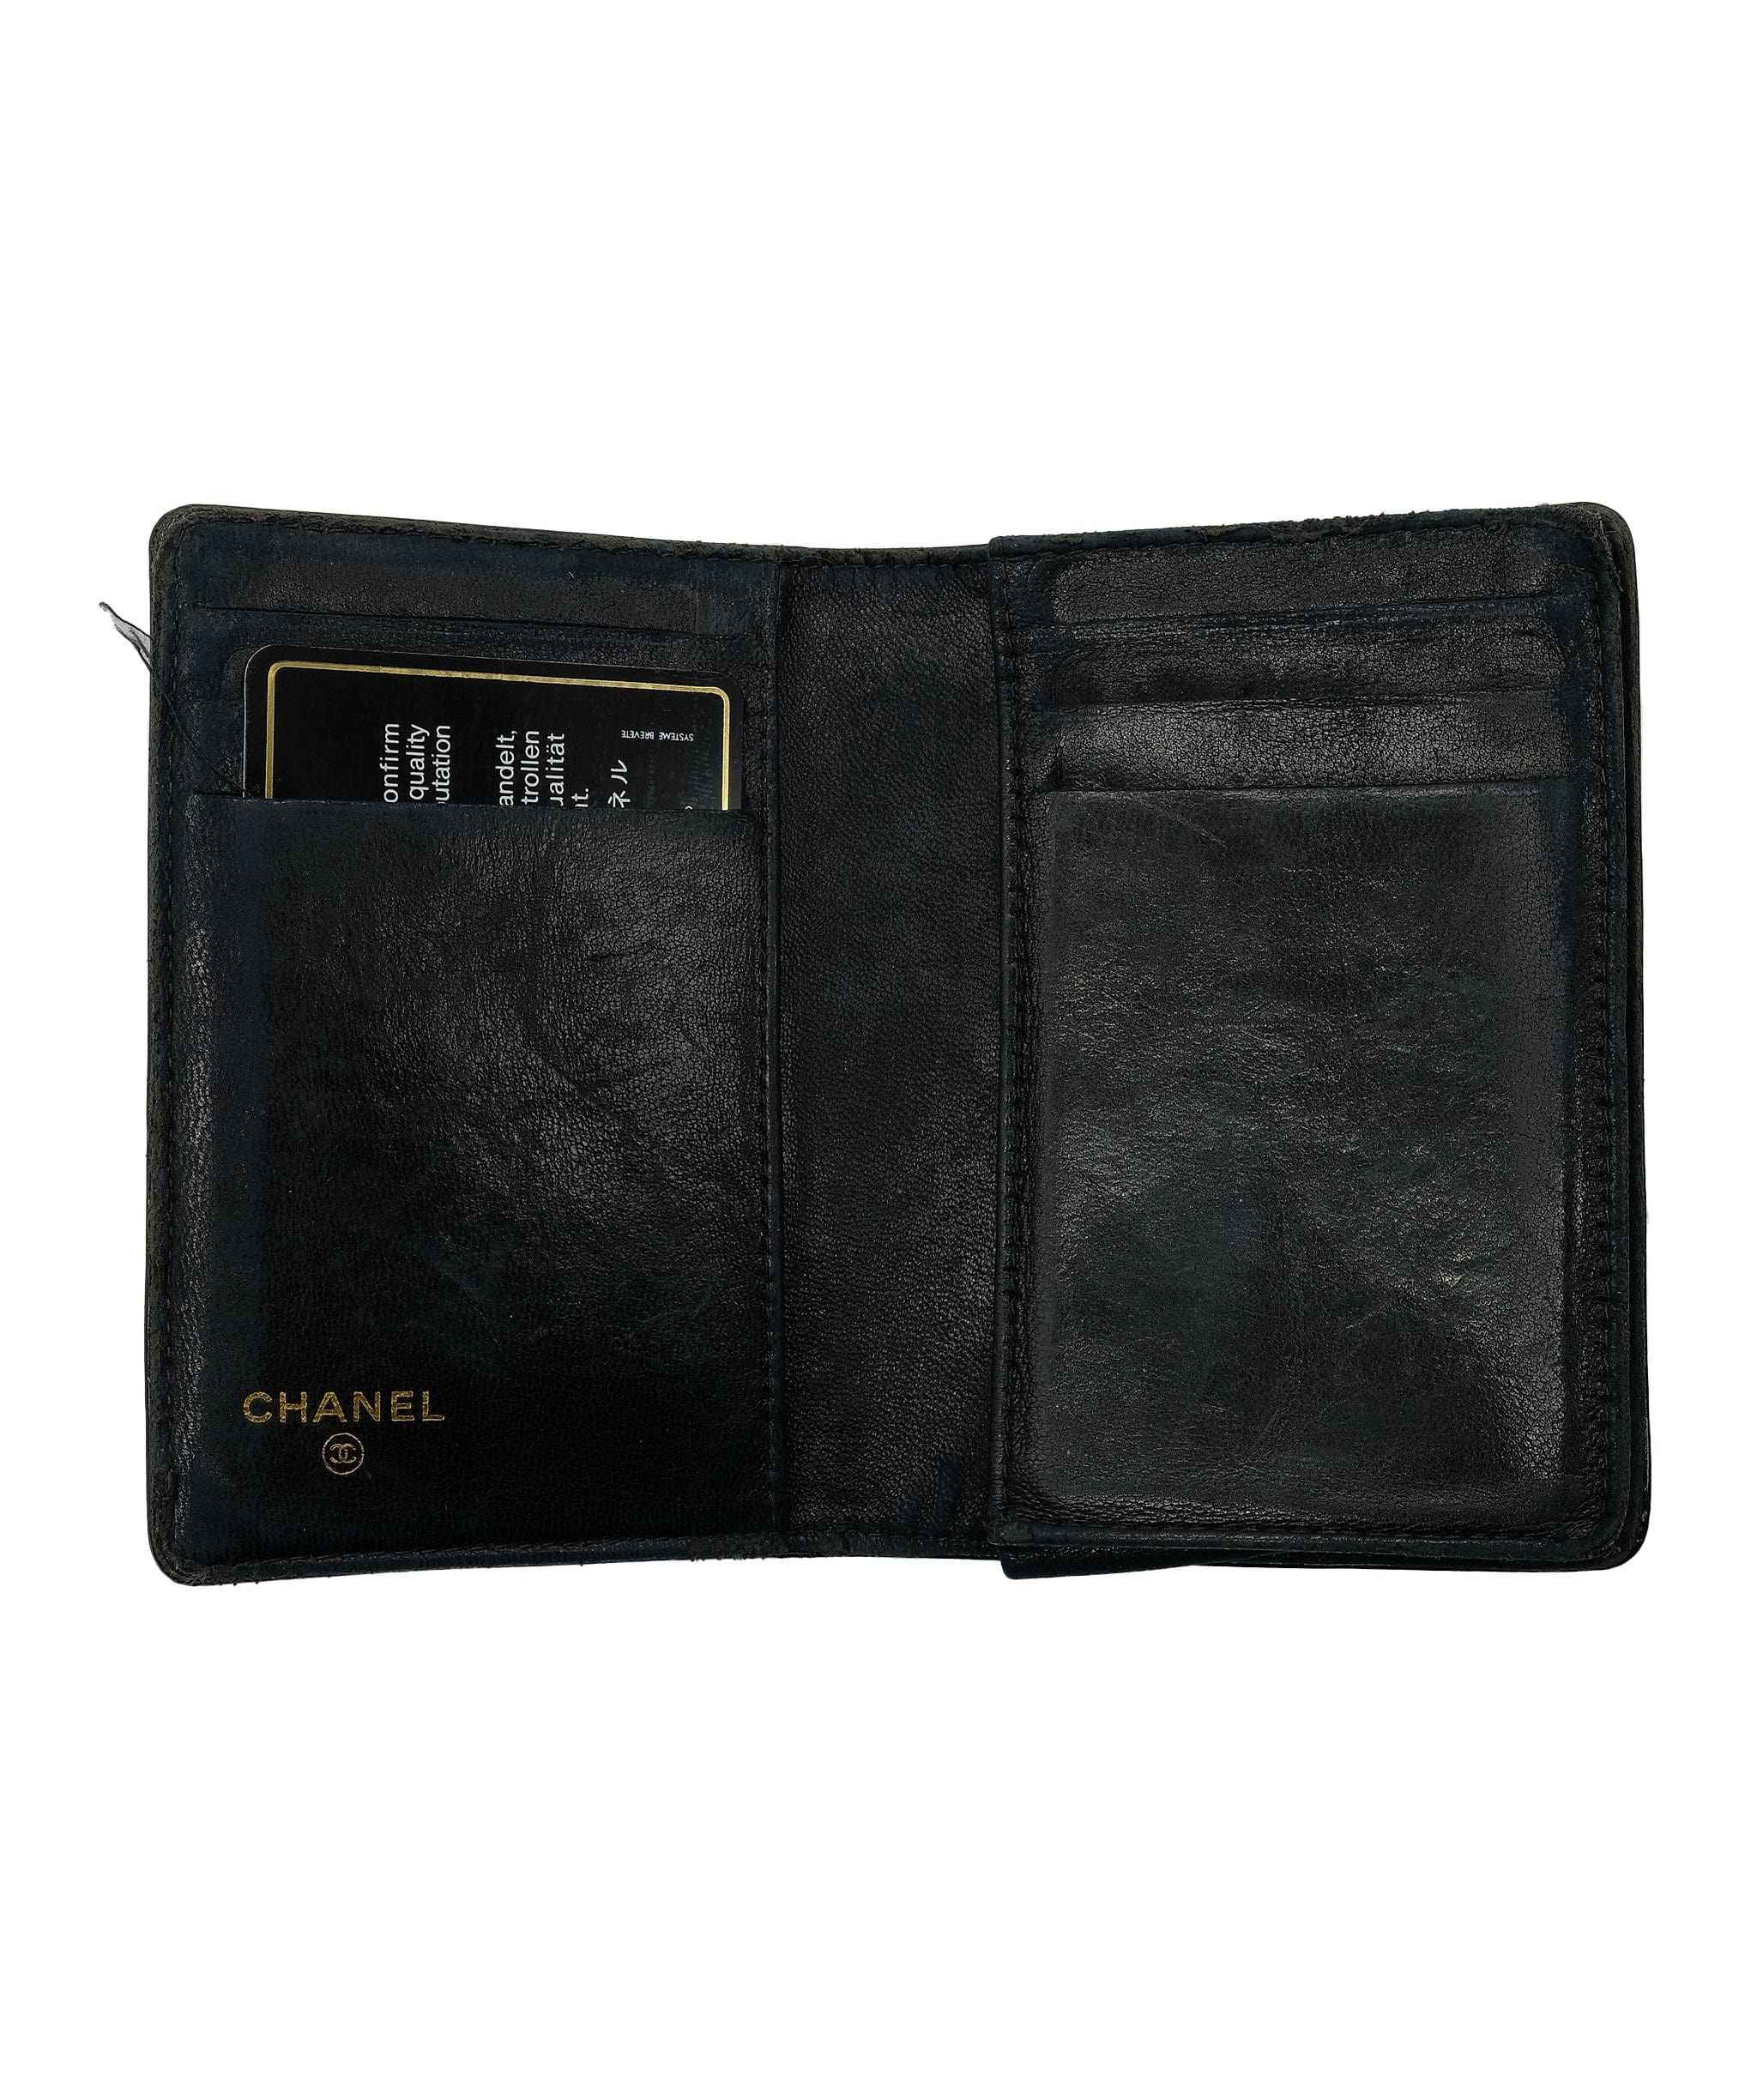 Chanel Chanel Card Holder Patent Black RJC2931